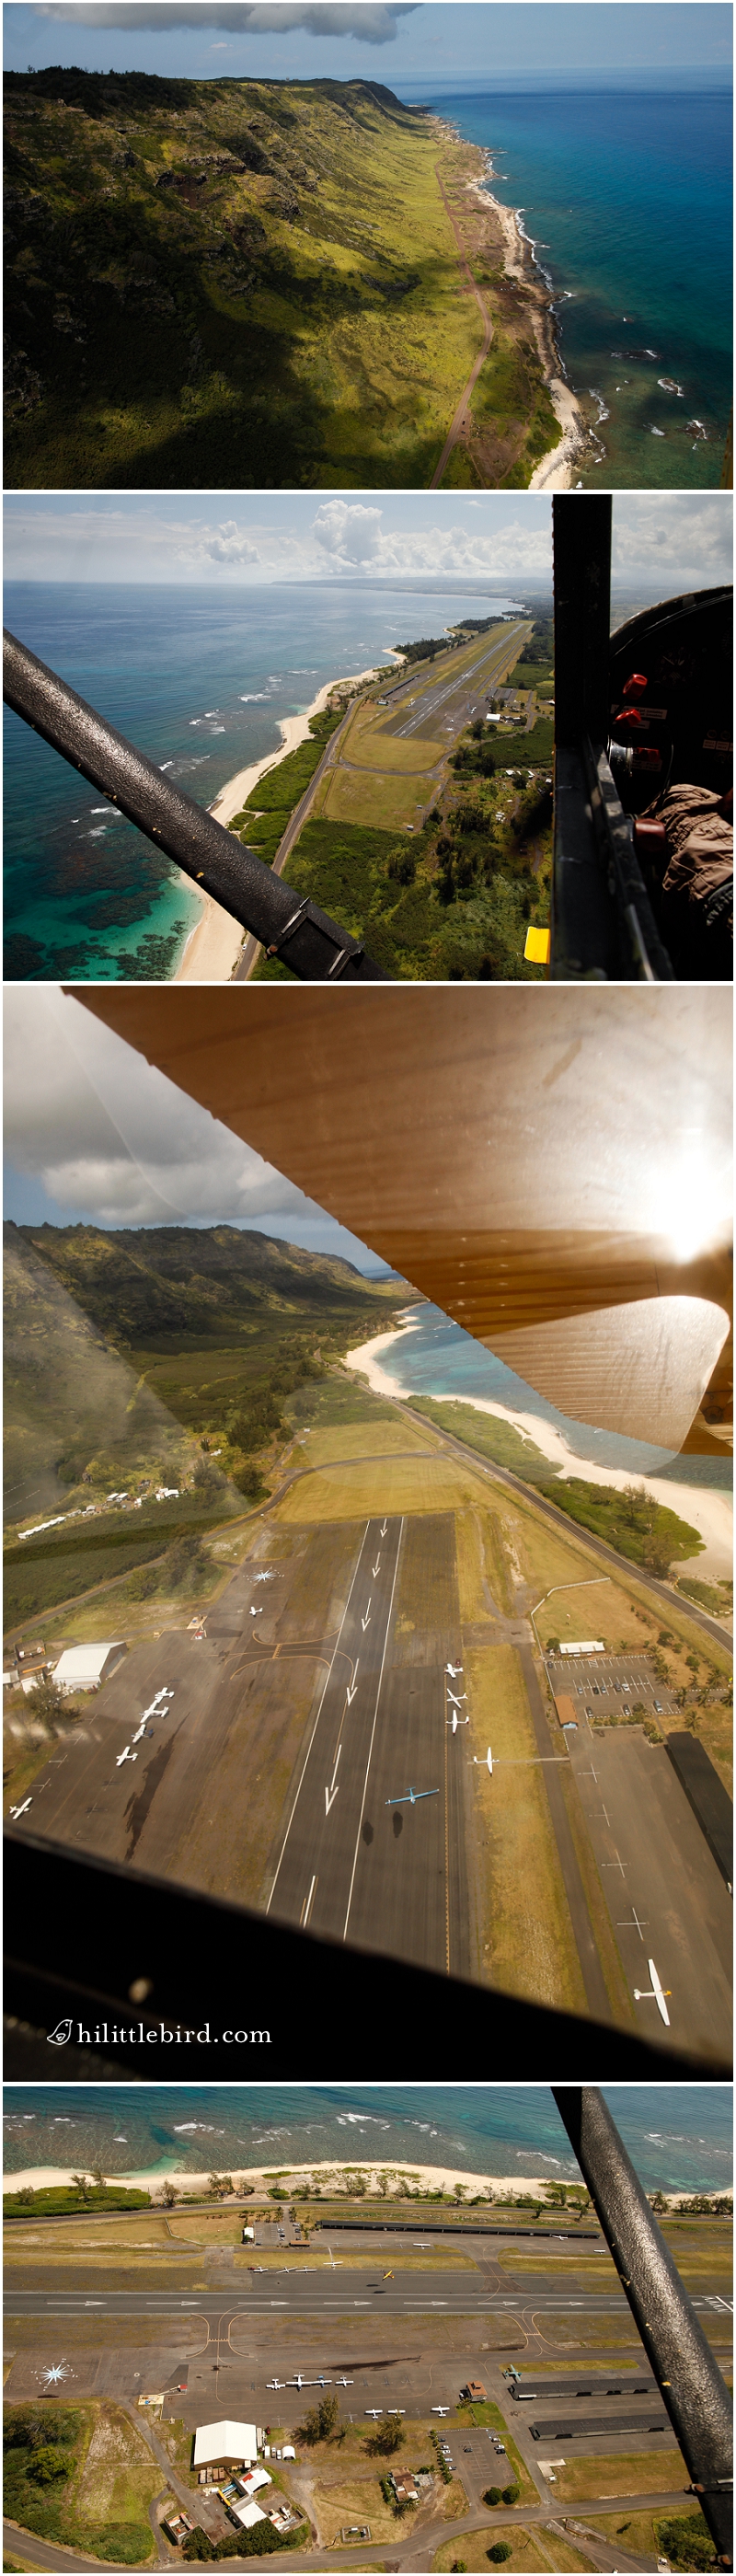 dilingham air field glider flight